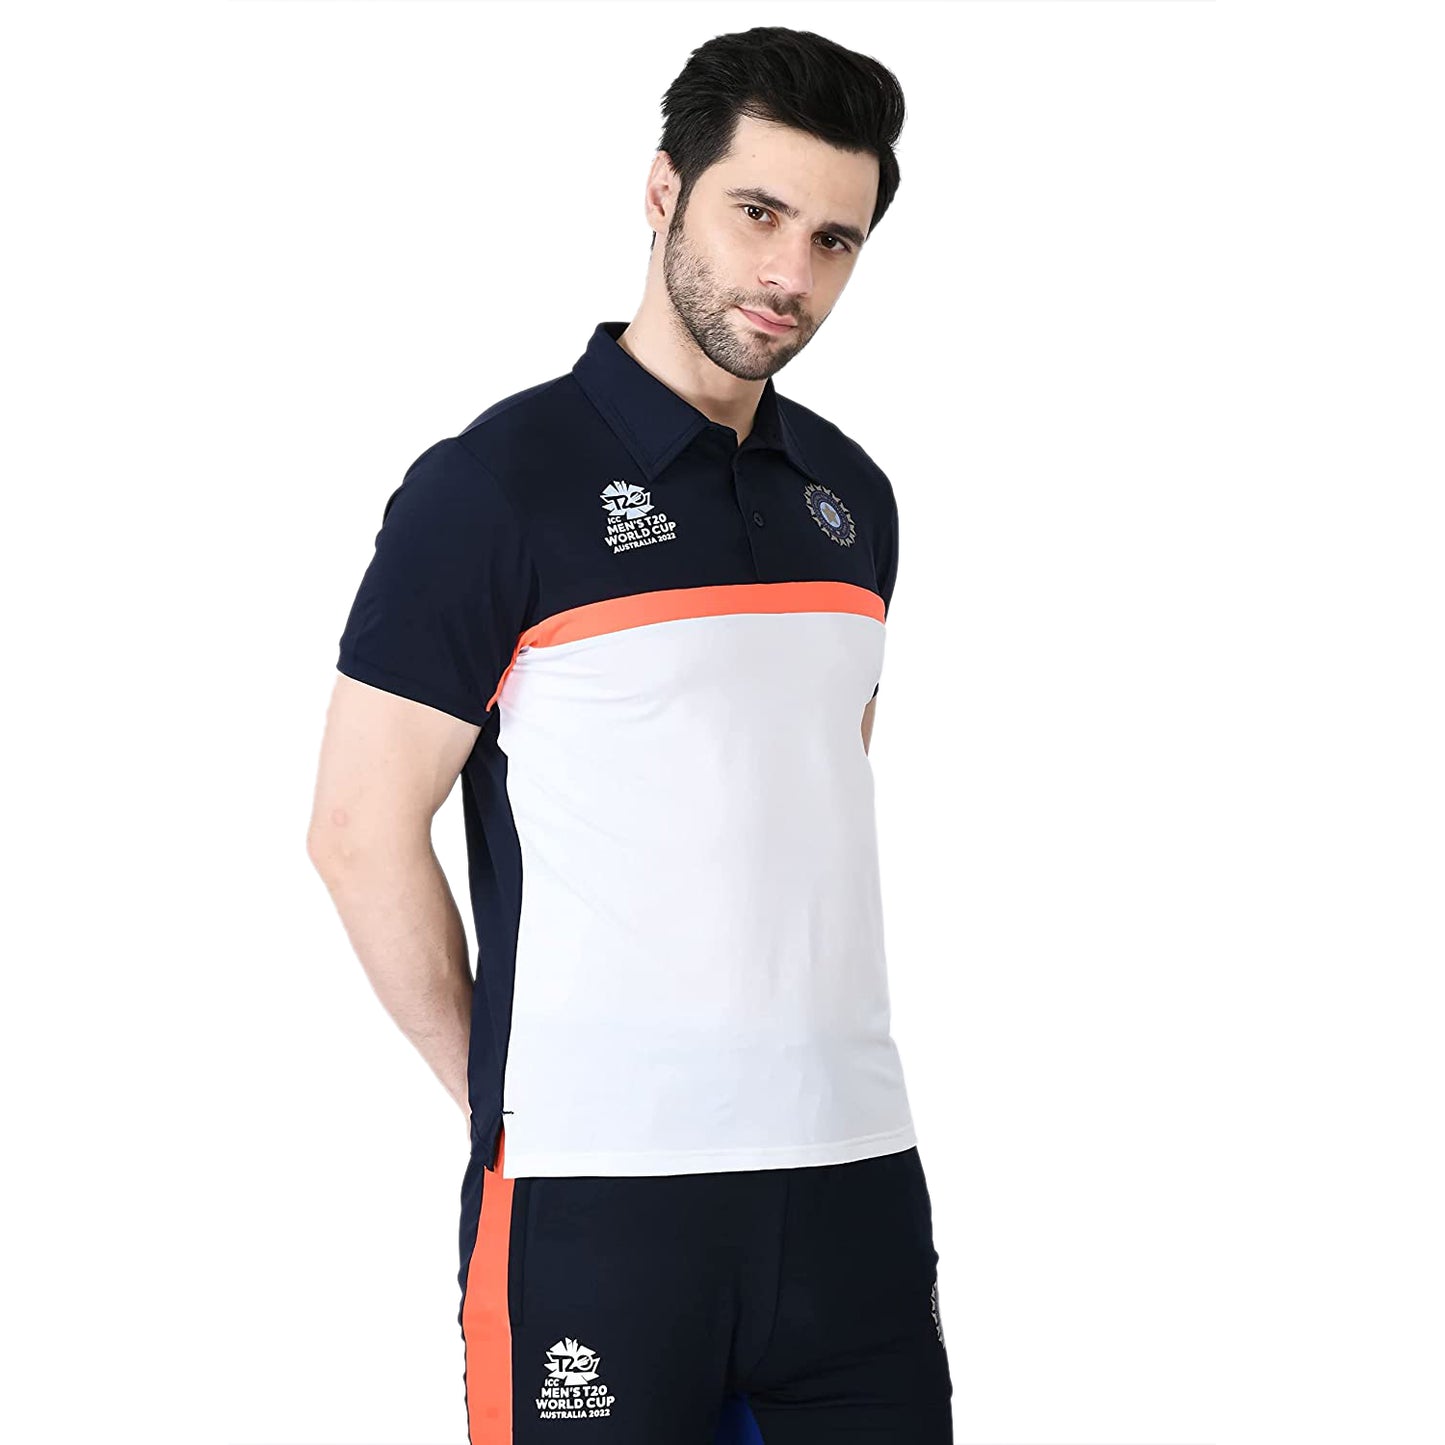 Playr Icc T20 Men's Regular Fit T-Shirt, White/Navy - Best Price online Prokicksports.com